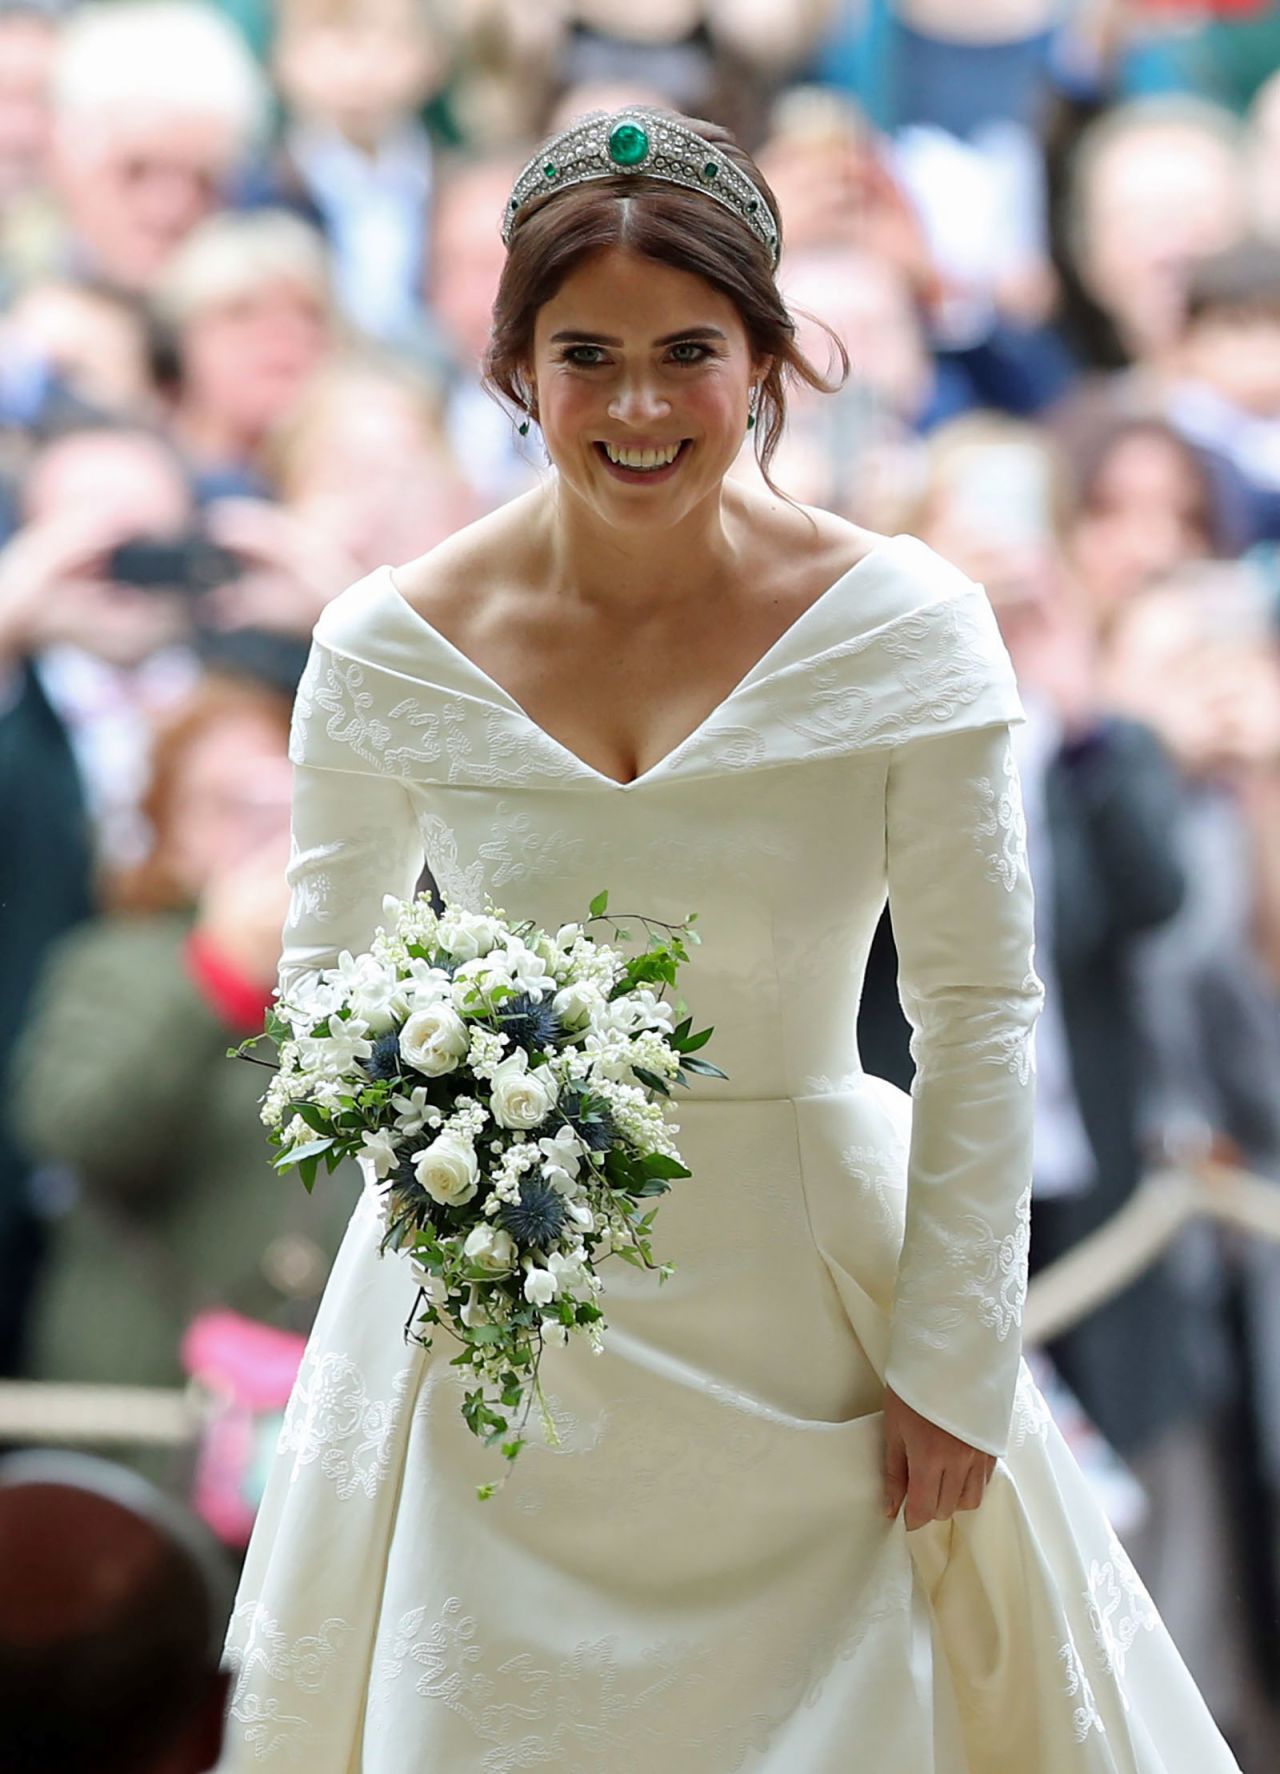 Princess Eugenie arrives for her wedding to Jack Brooksbank wearing the Greville Emeral tiara.